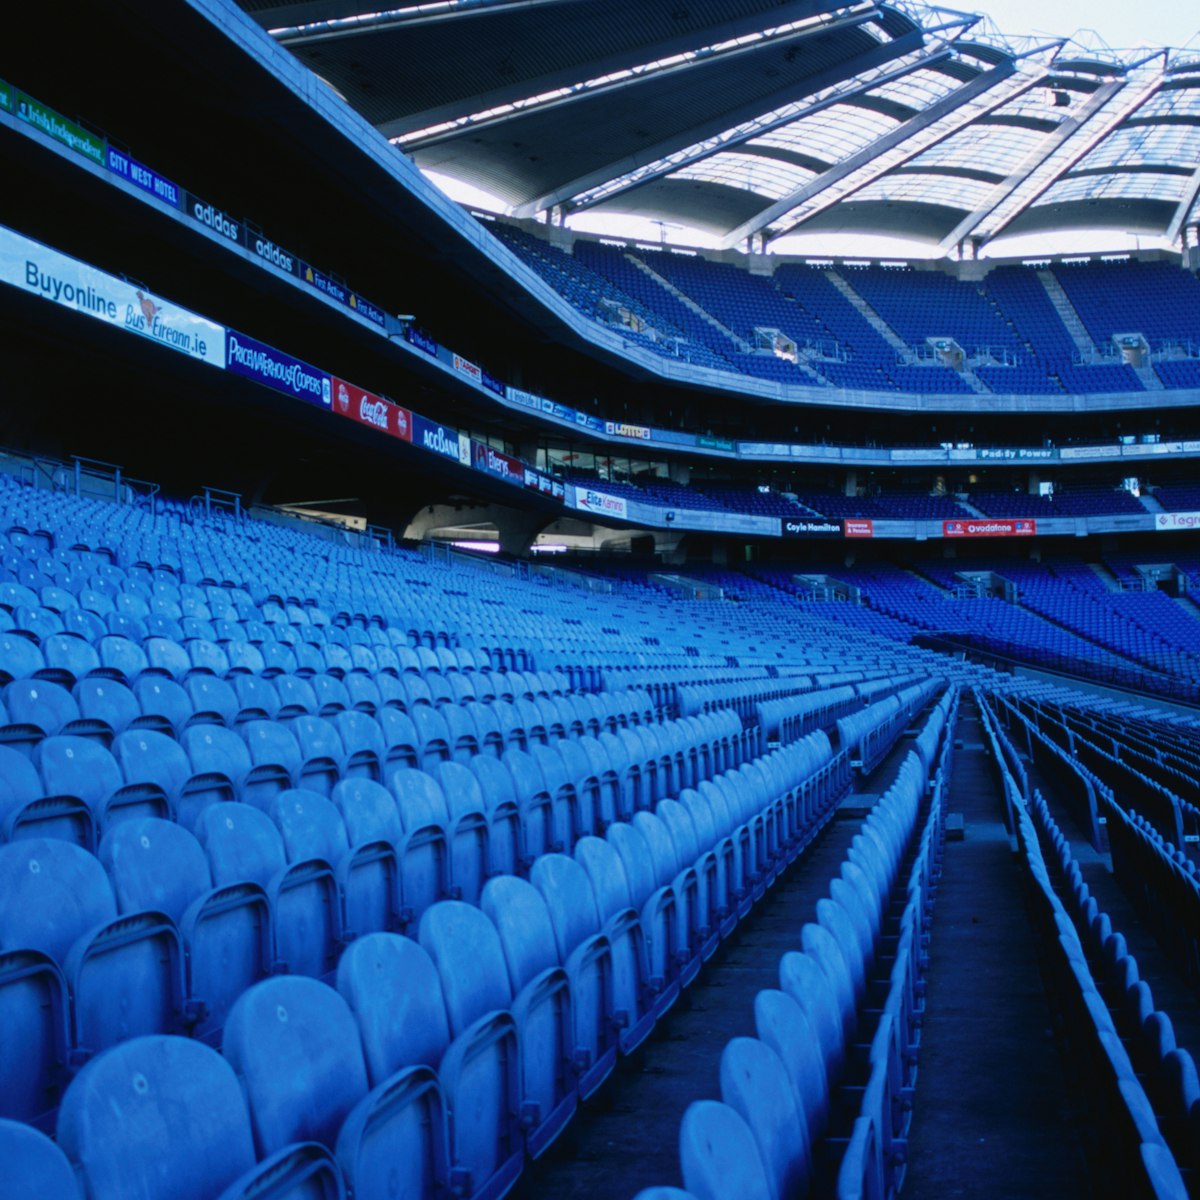 Seats at Croke Park Stadium.